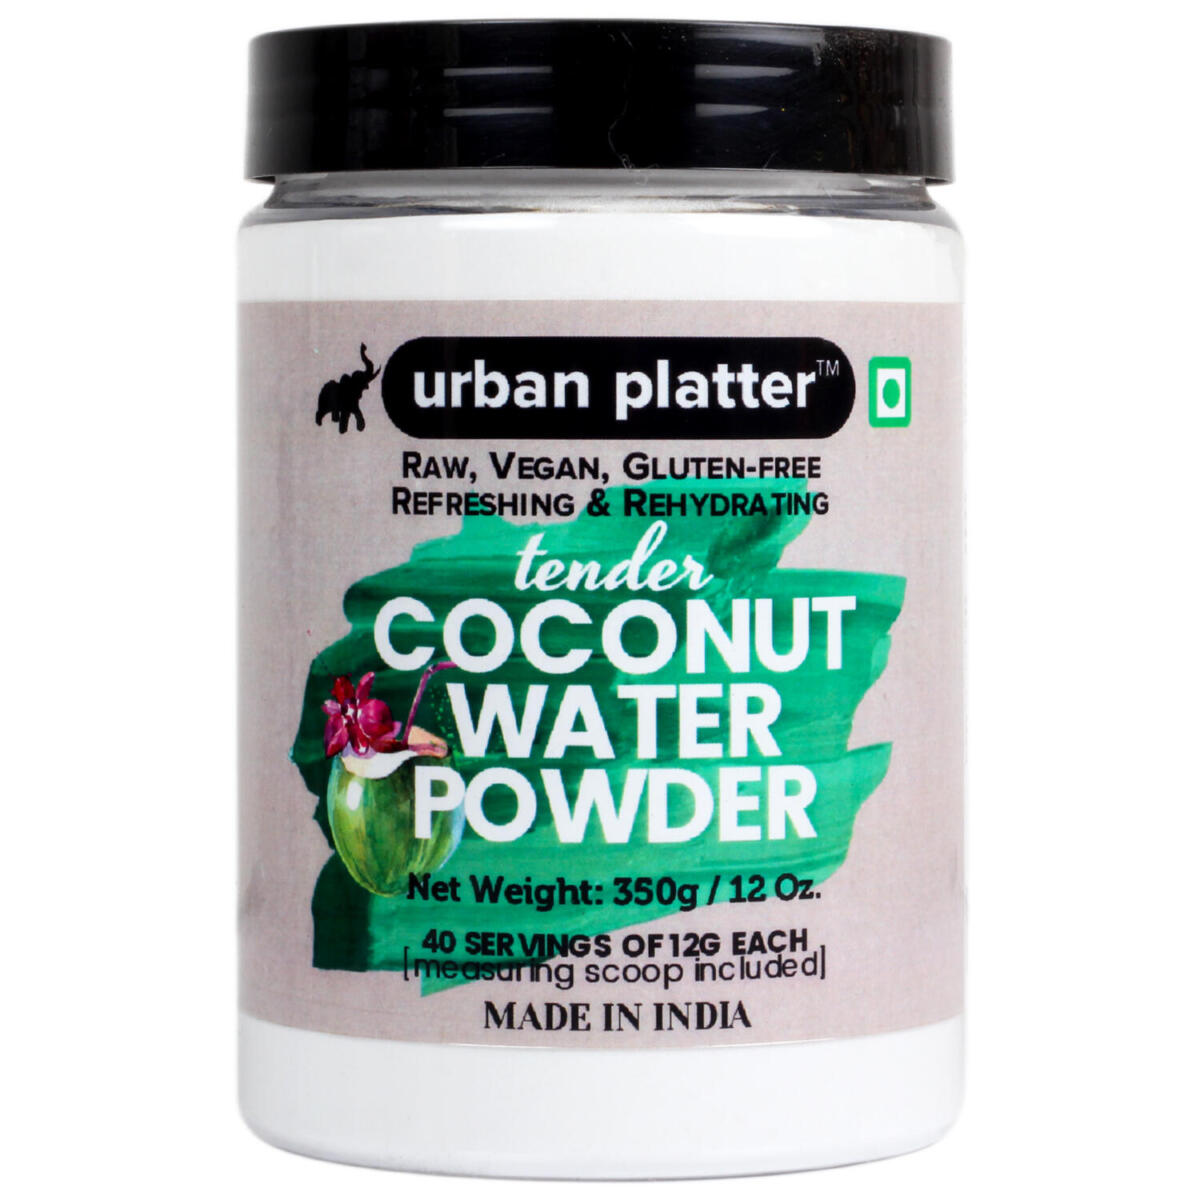 Buy Urban Platter Tender Coconut Water Powder, 350g [Raw, Vegan